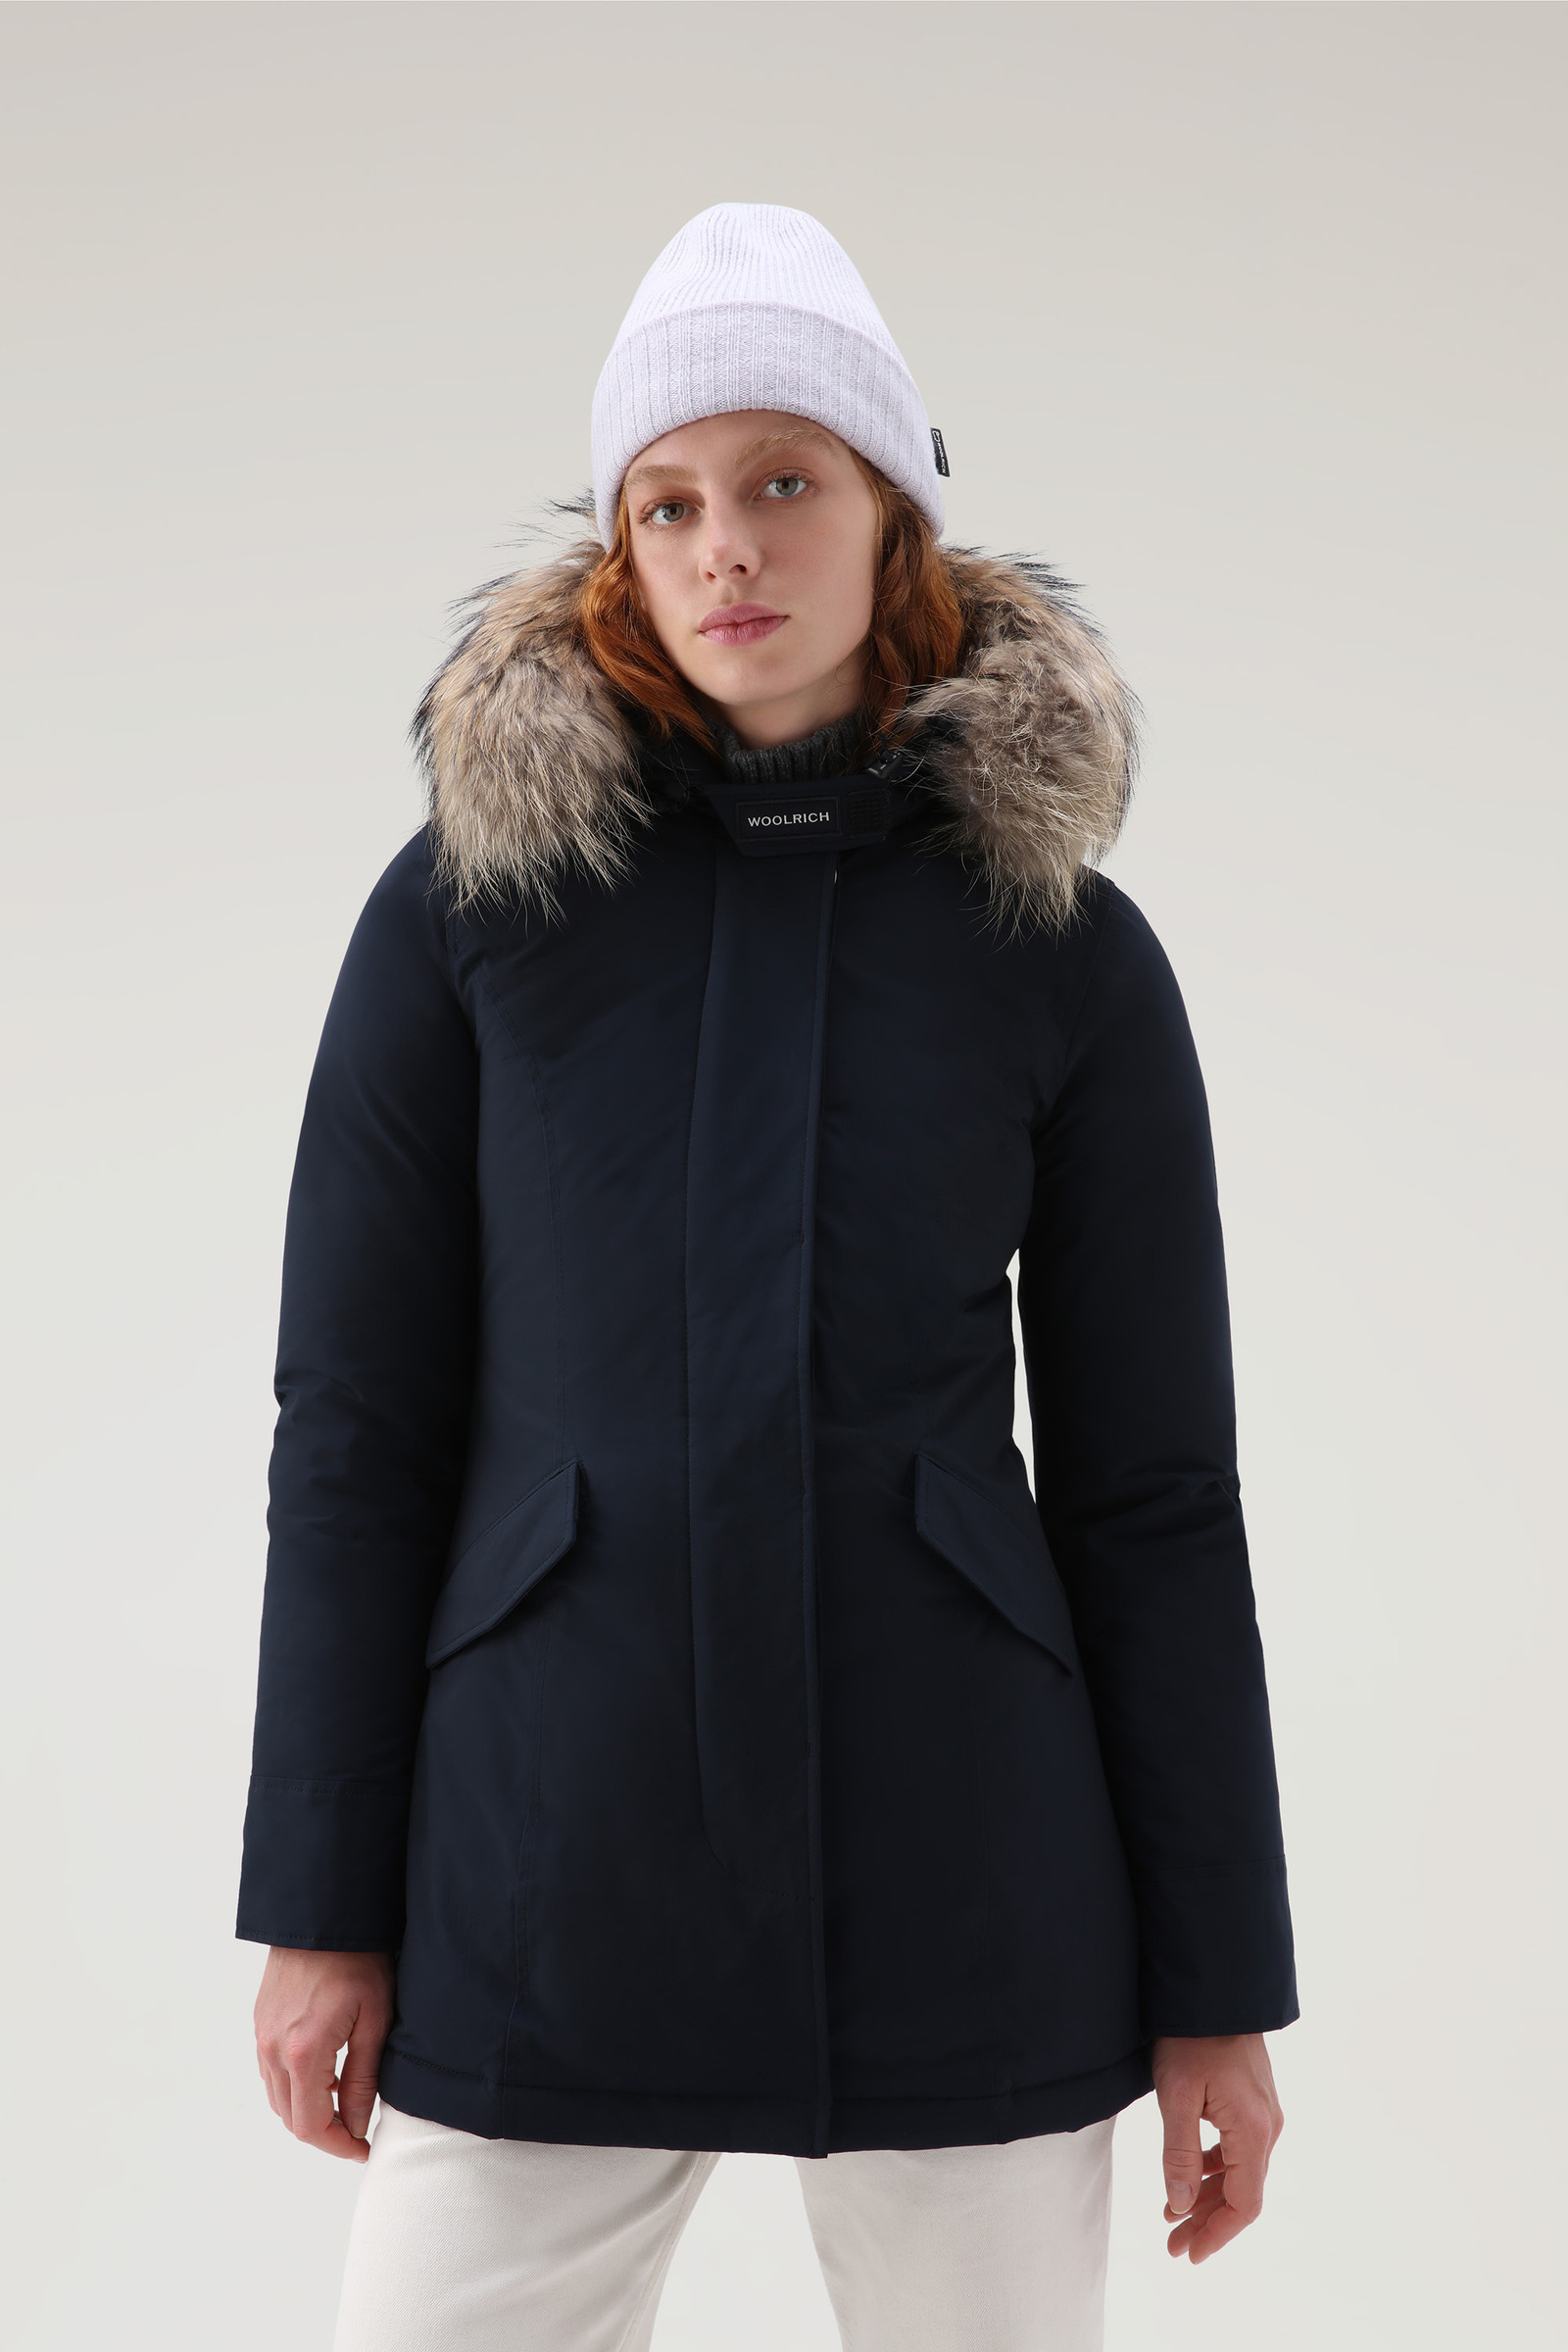 Inzichtelijk kandidaat Associëren Women's Arctic Parka in Urban Touch with Detachable Fur Blue | Woolrich USA